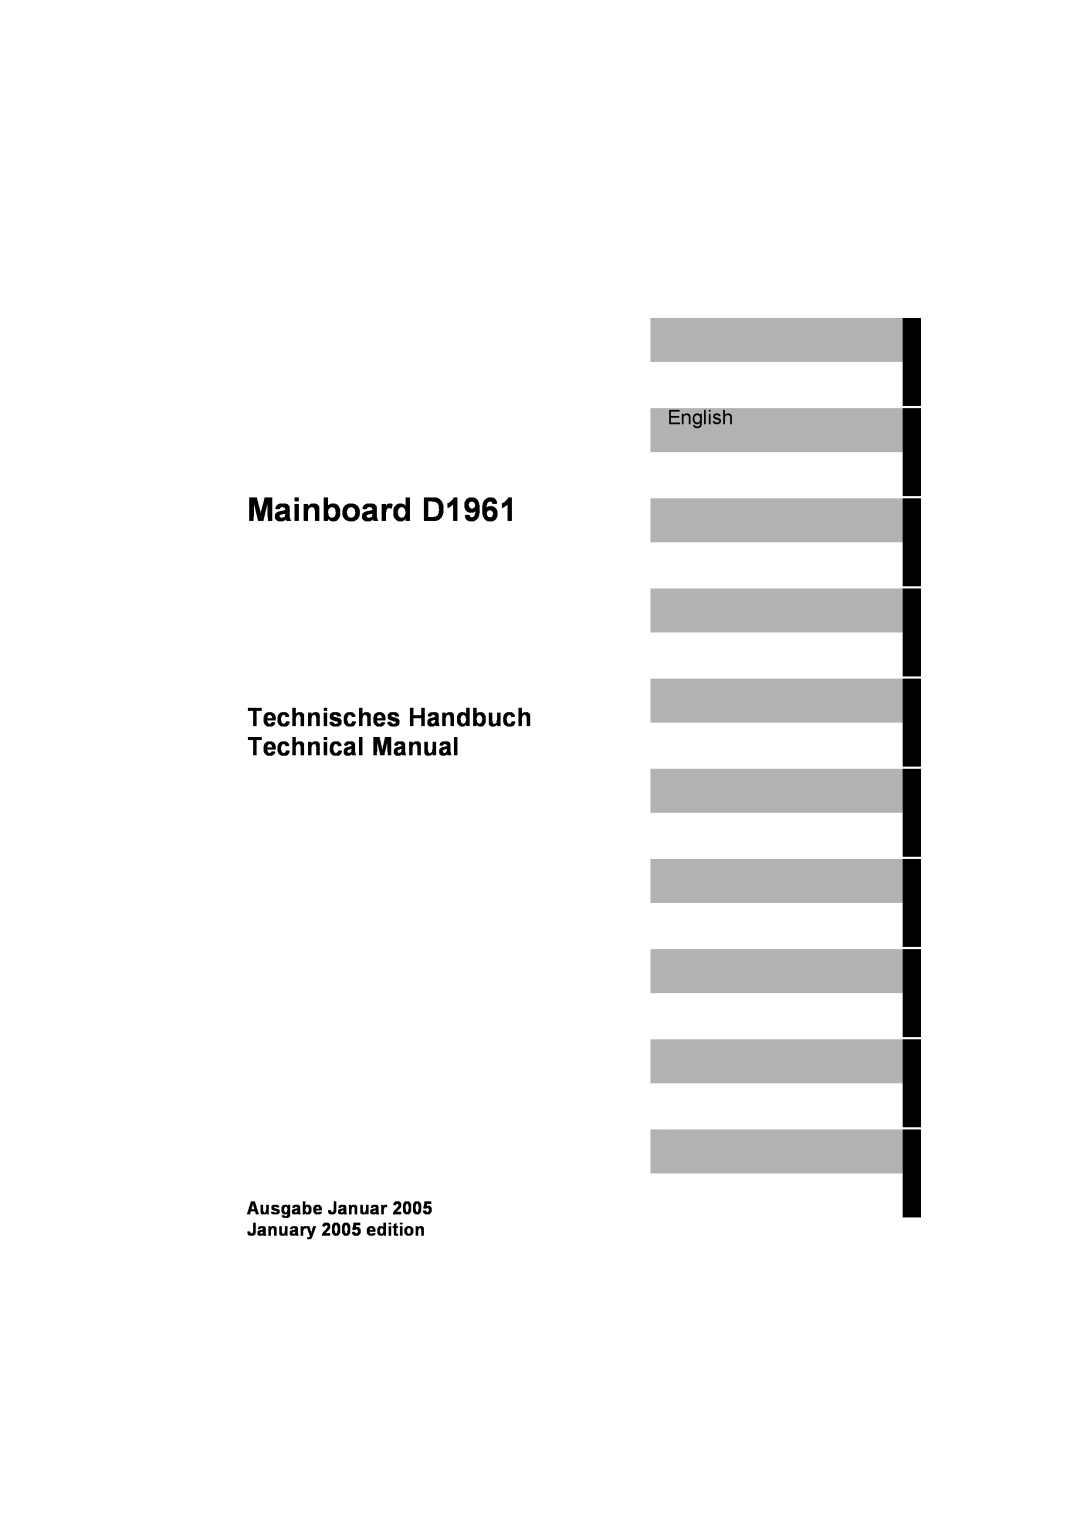 Fujitsu technical manual Mainboard D1961, Technisches Handbuch Technical Manual, English 